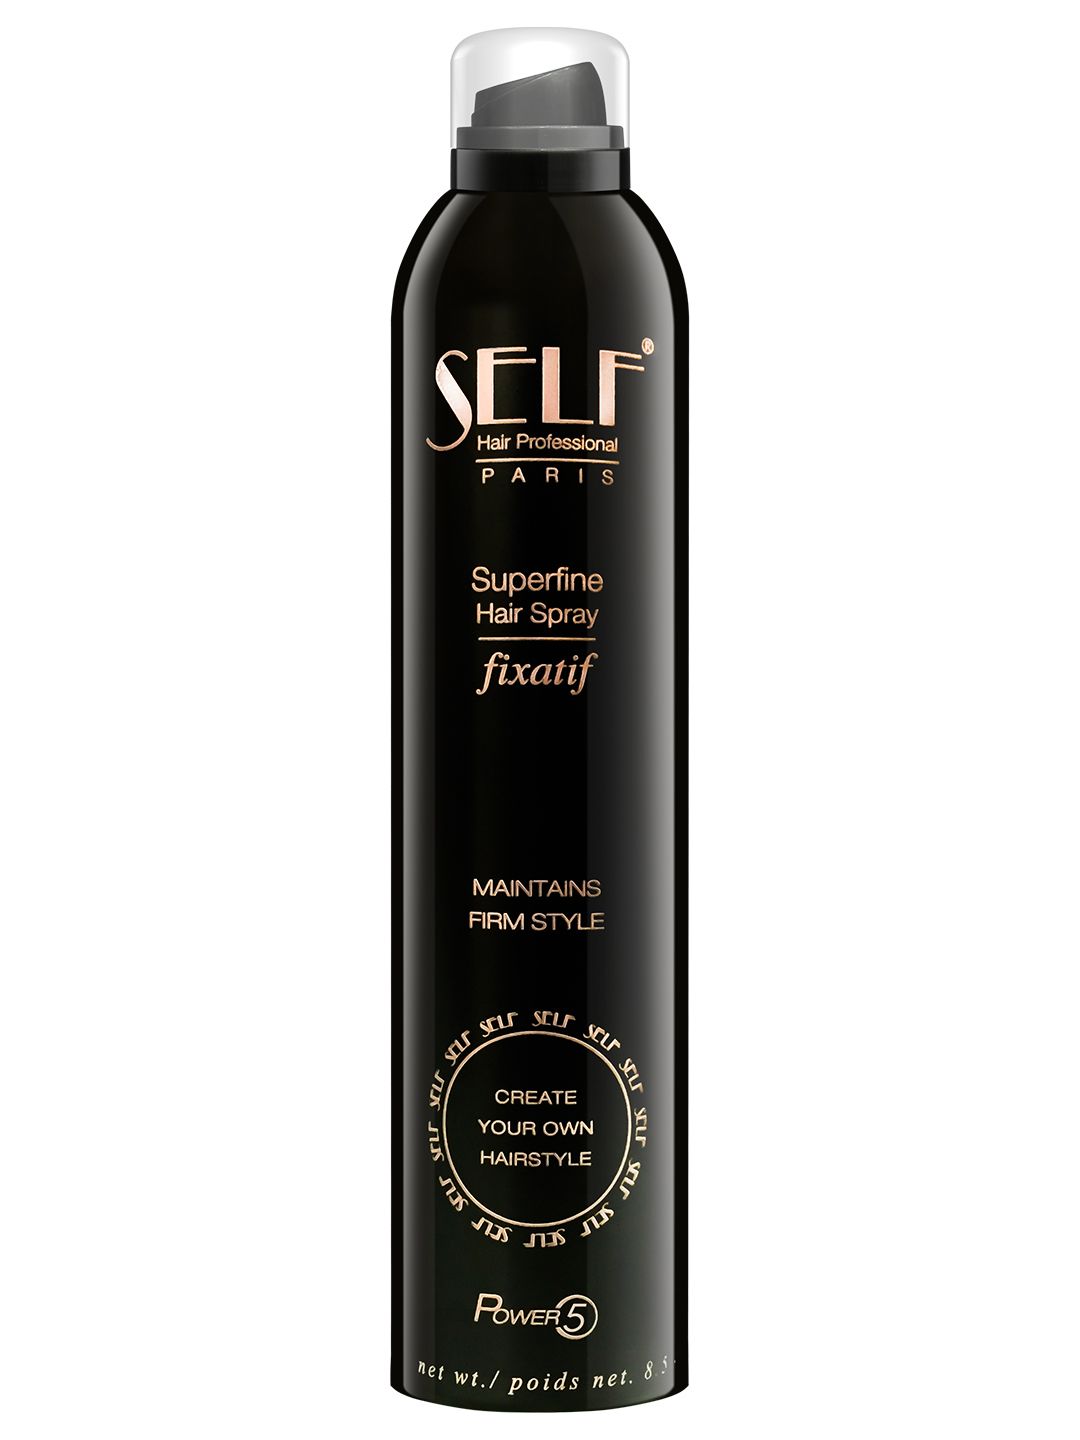 SELF Hair Professional Paris Fixatif Power 7 Superfine Hair Spray 250 ml Price in India